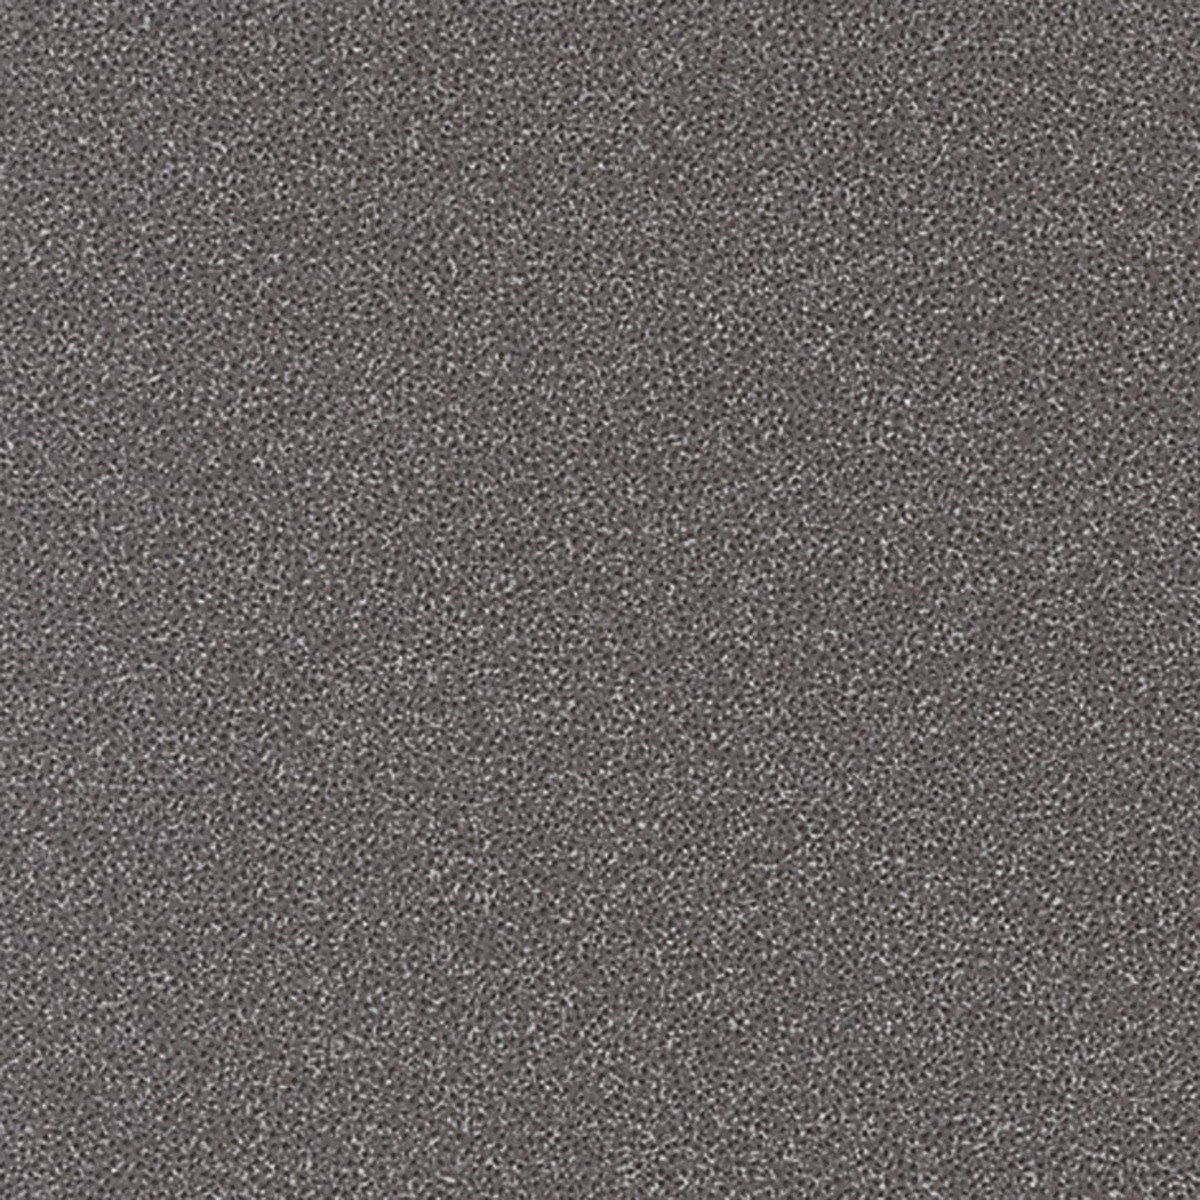 Dlažba Rako Taurus Granit černá 30x30 cm protiskluz TRM34069.1 Rako